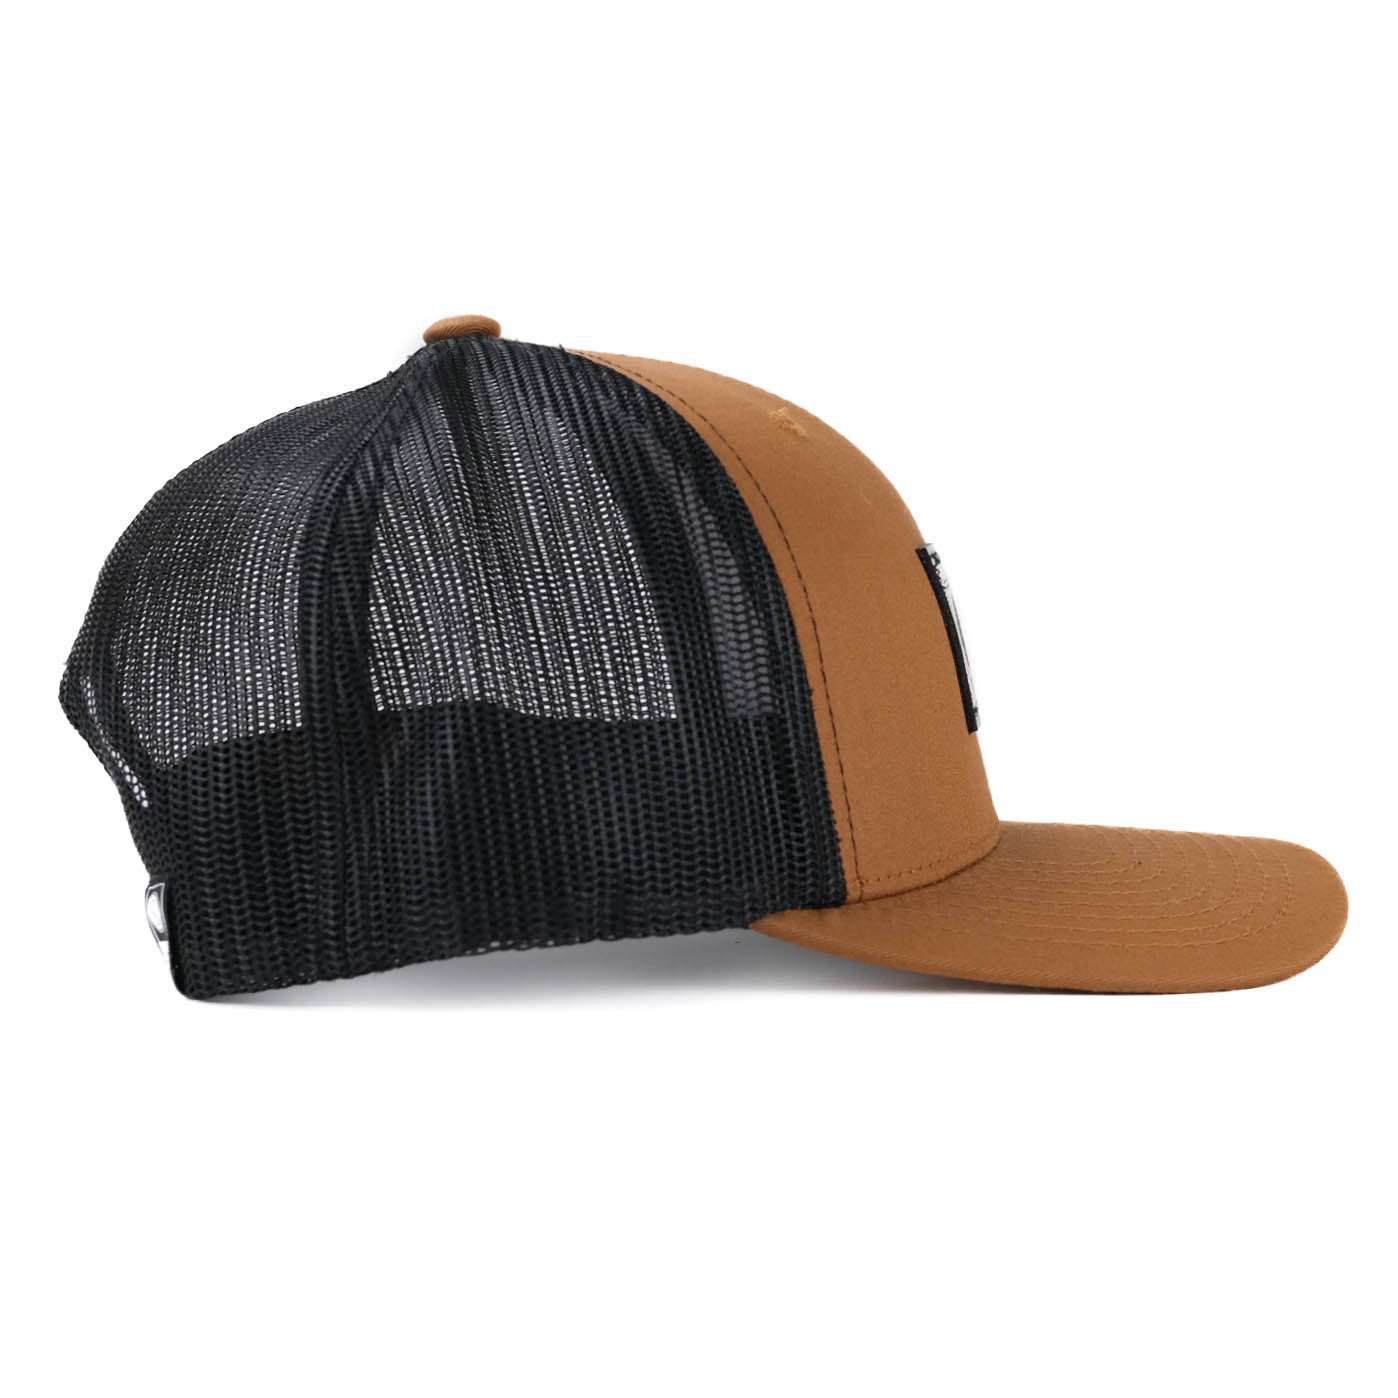 Topstitch Retro Trucker Hat - Camel / Black